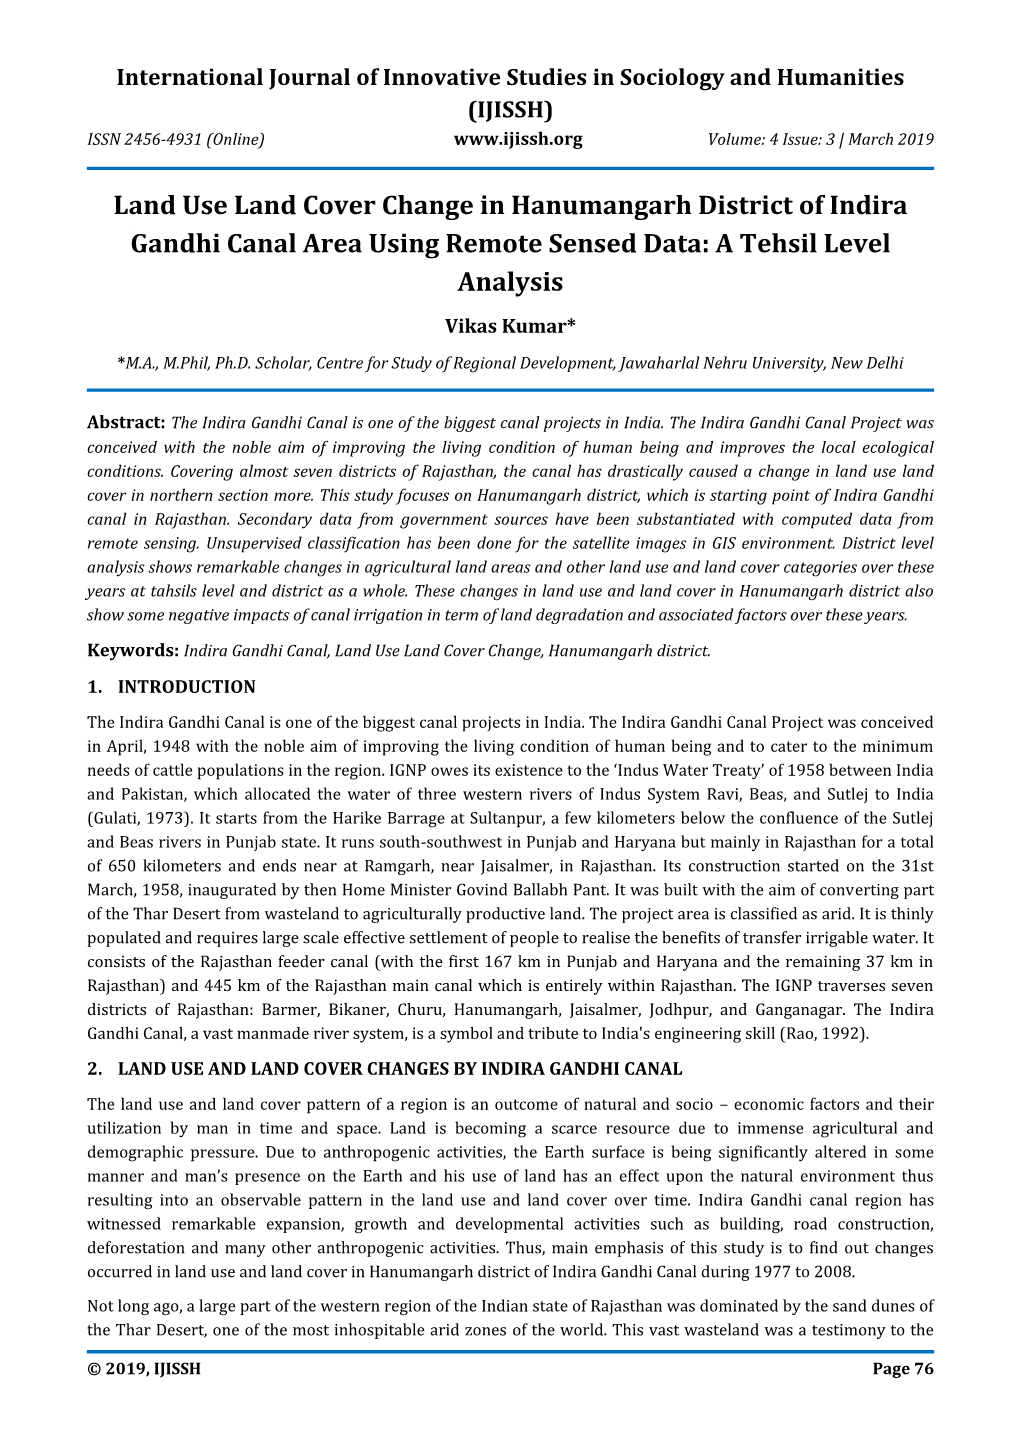 Land Use Land Cover Change in Hanumangarh District of Indira Gandhi Canal Area Using Remote Sensed Data: a Tehsil Level Analysis Vikas Kumar*